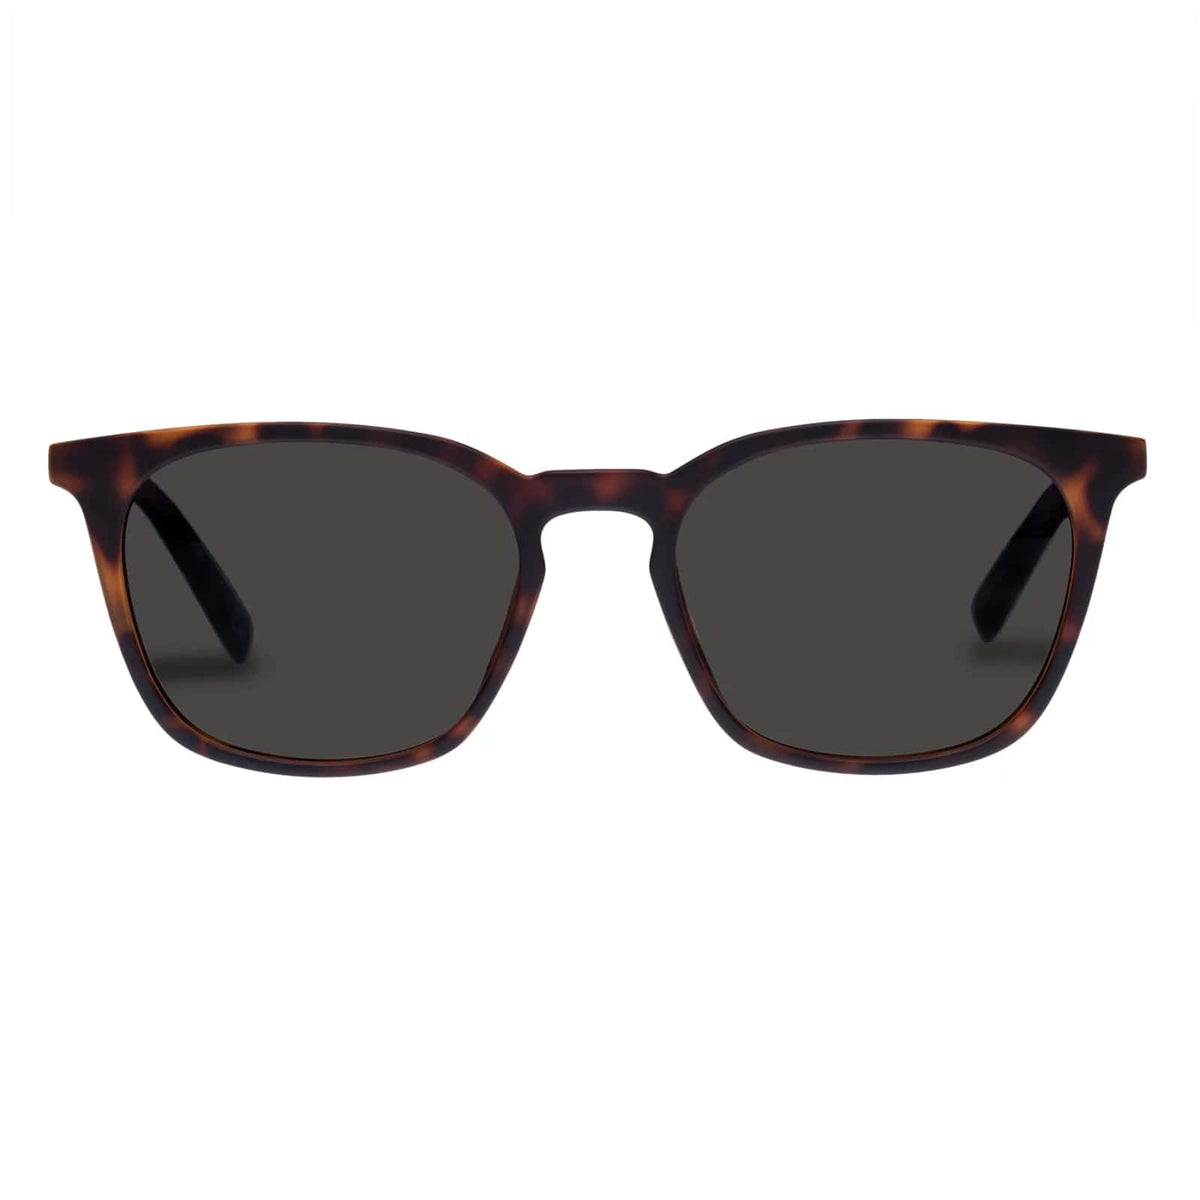 Huzzah Sunnies - Le Specs - Splash Swimwear  - le specs, new accessories, Oct22, sunglasses, sunnies - Splash Swimwear 